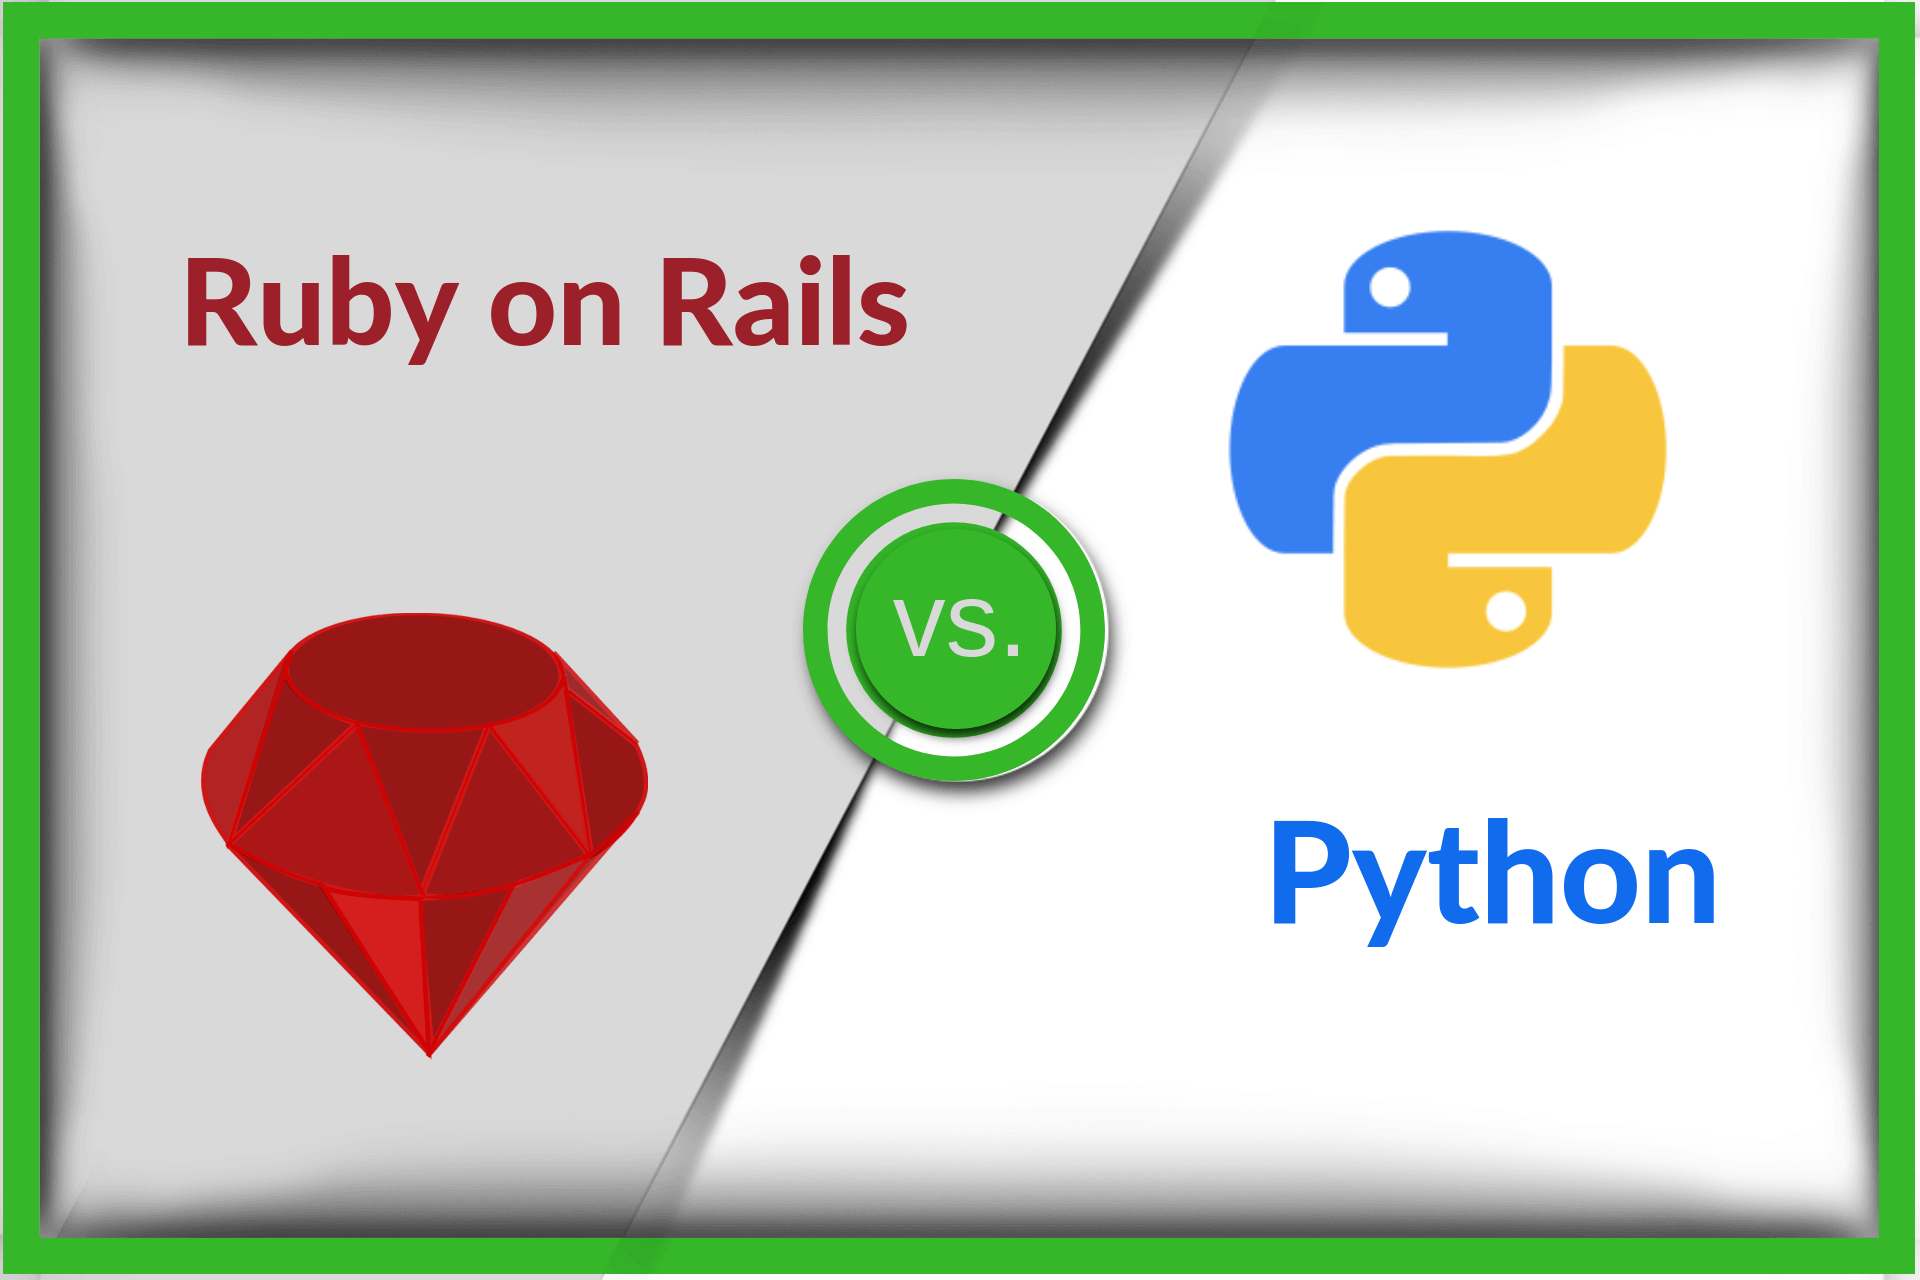 Ruby on Rails - Wikipedia